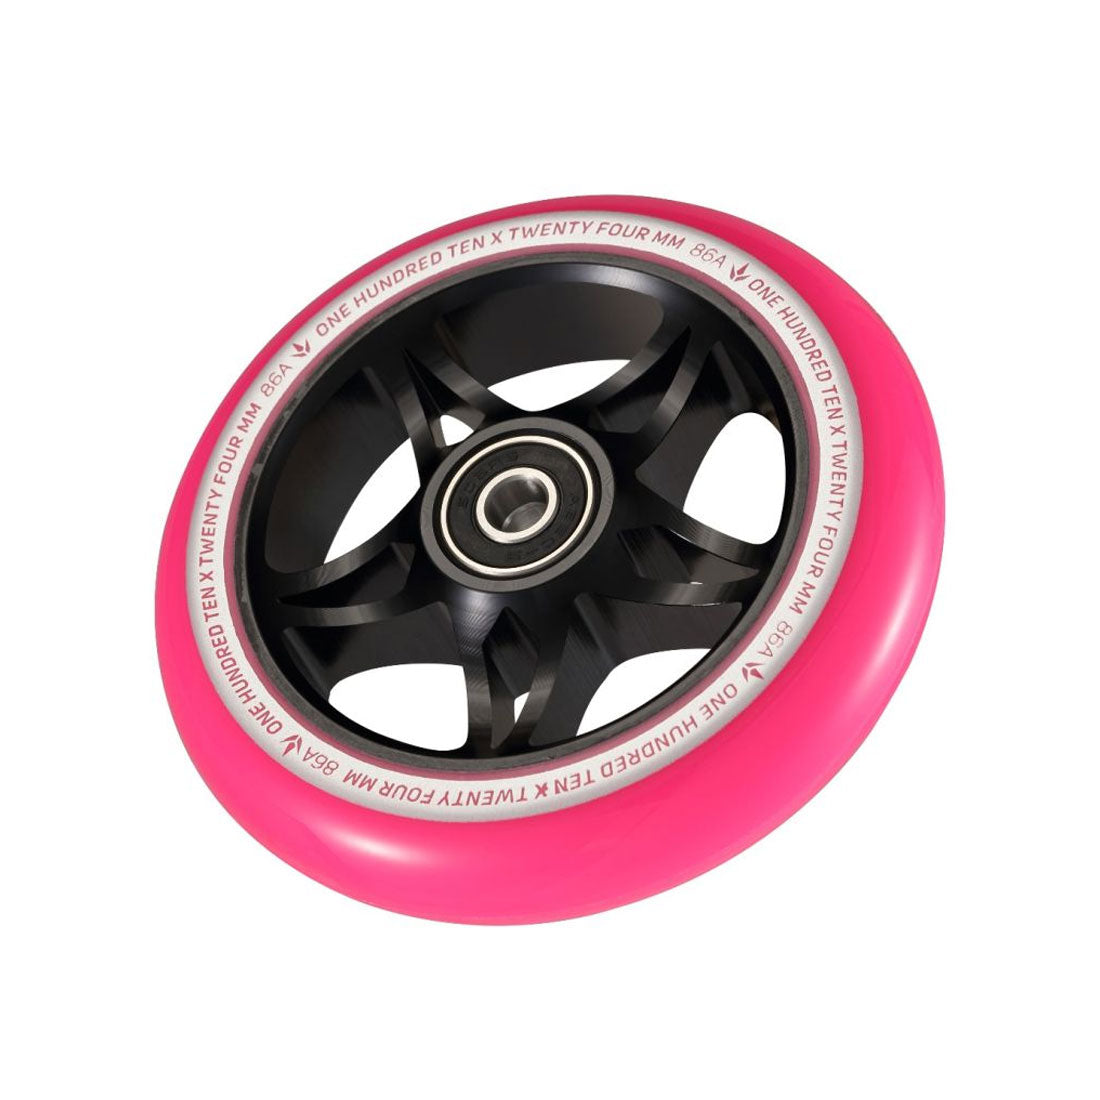 Envy S3 110mm Wheel - Pink Scooter Wheels